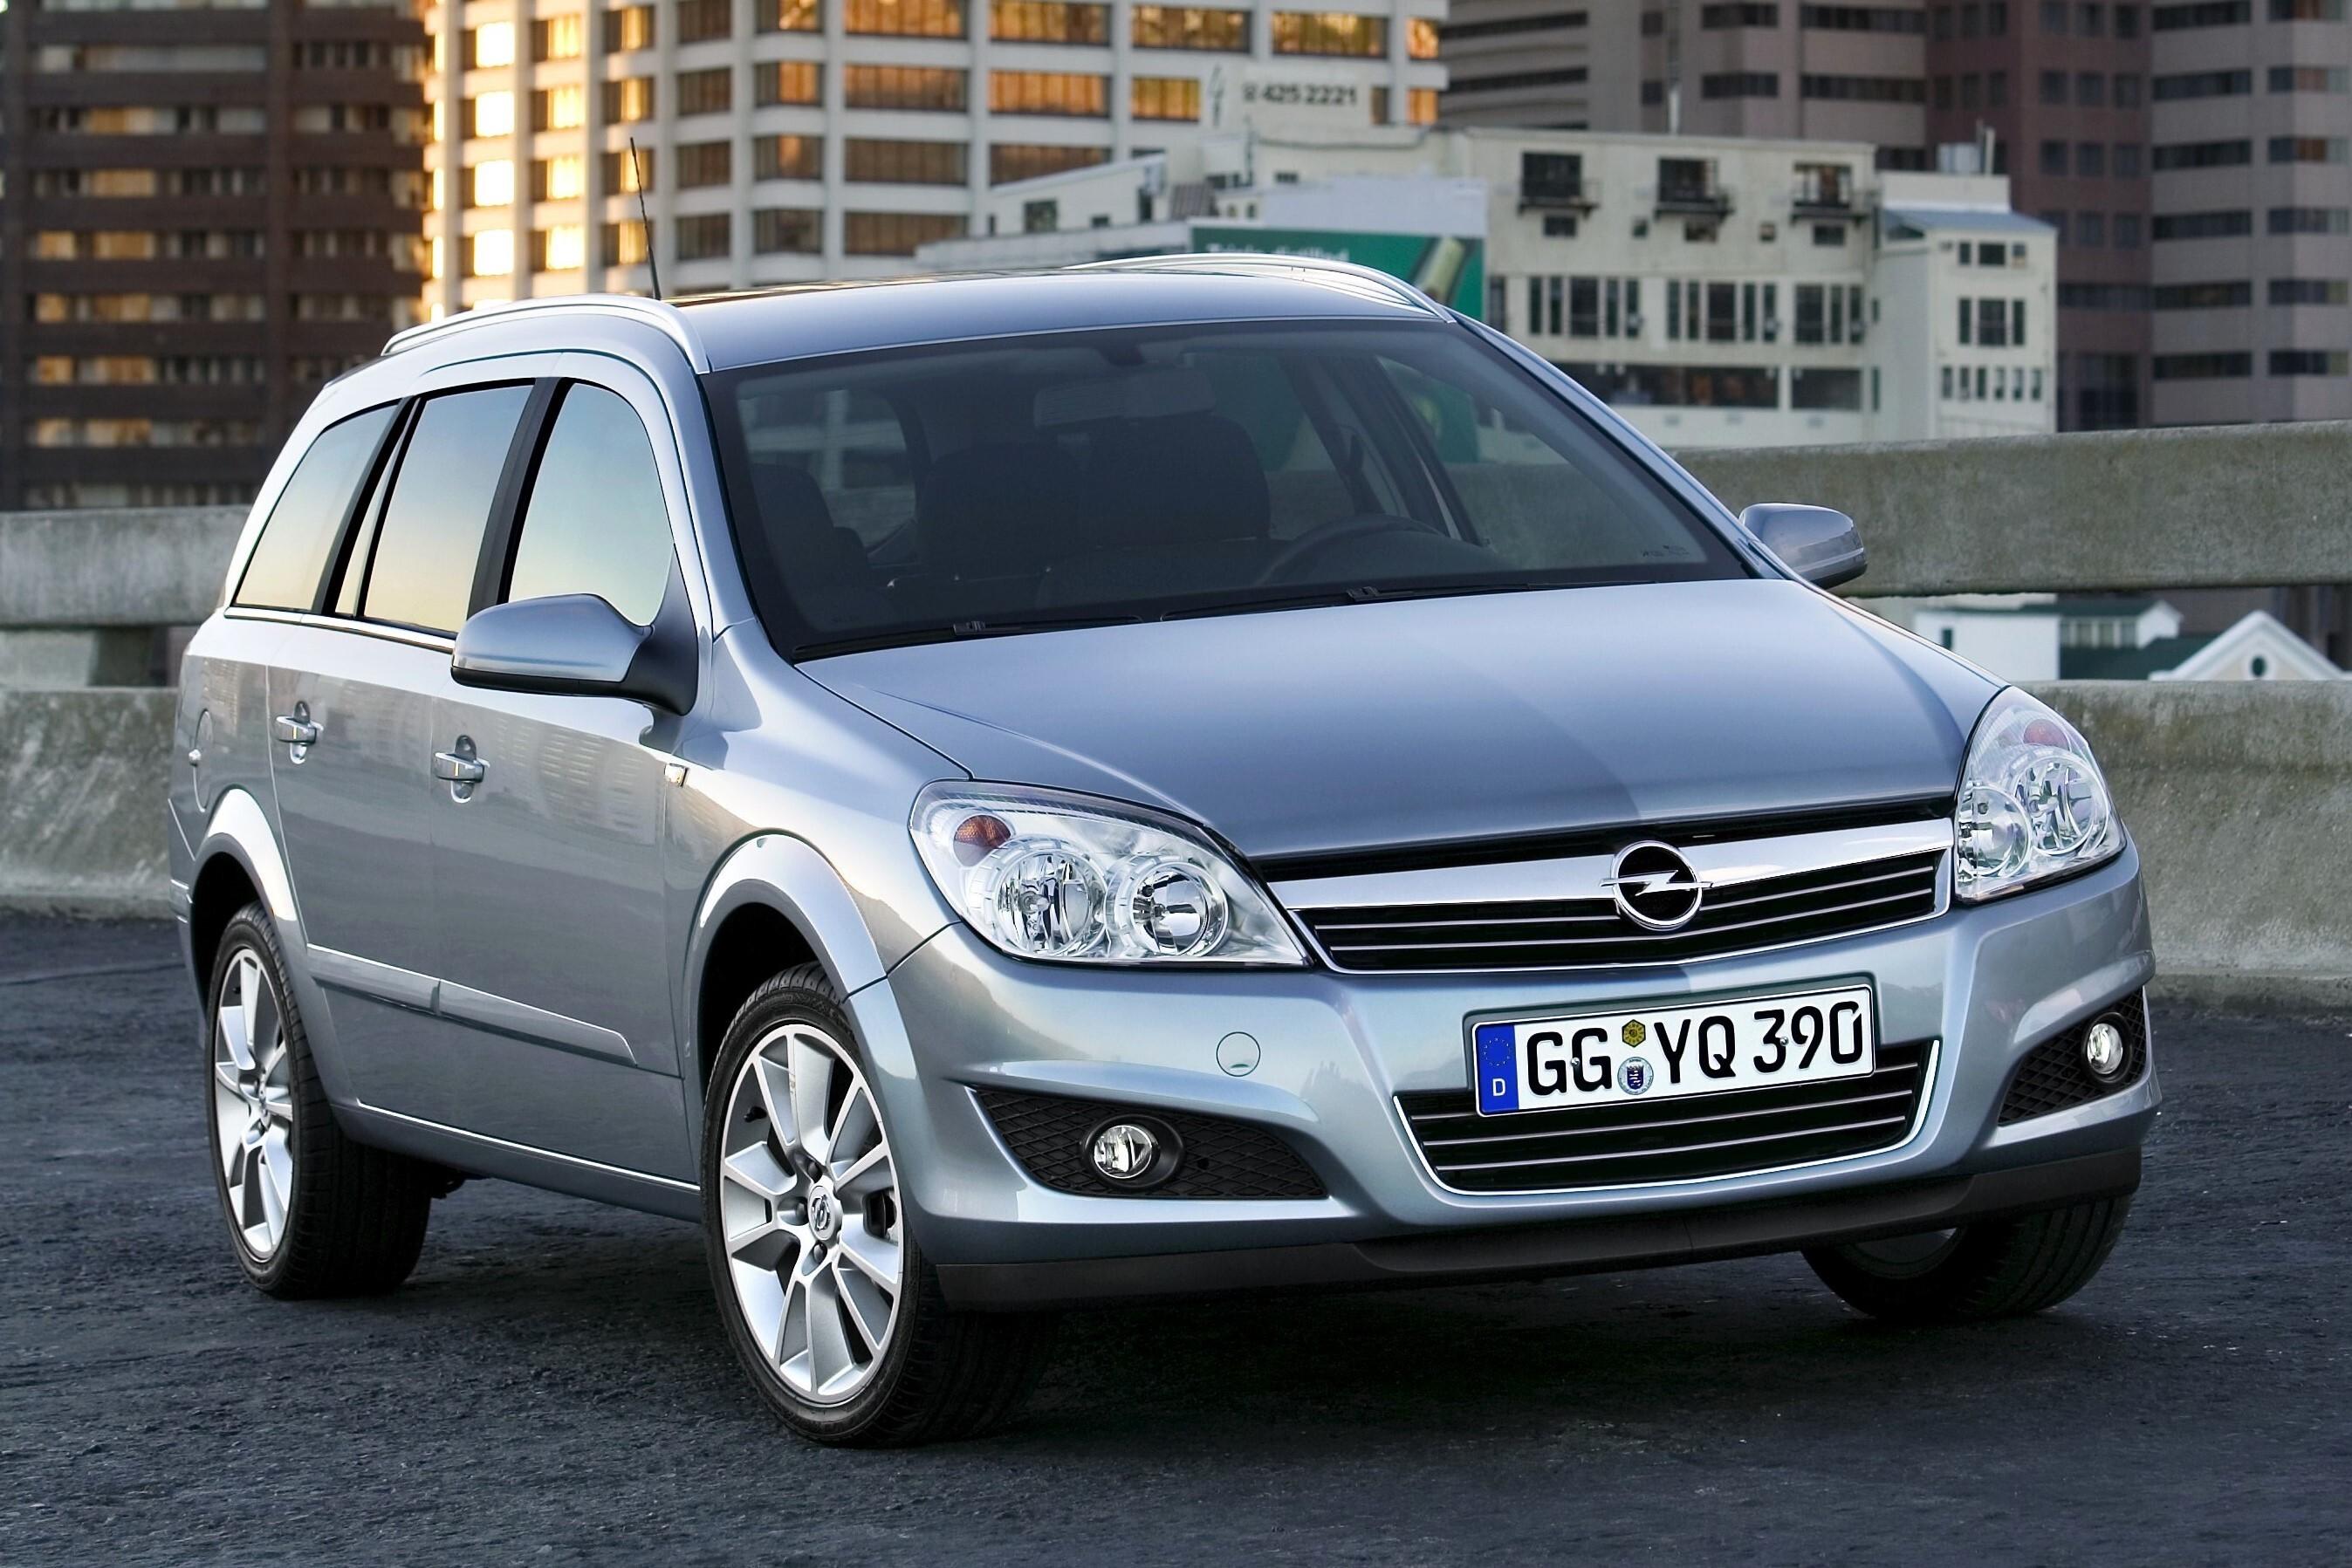 1.3 cdti. Opel Astra h 2007. Opel Astra 2007 универсал. Opel Astra Caravan 2007. Opel Astra h 2007 универсал.